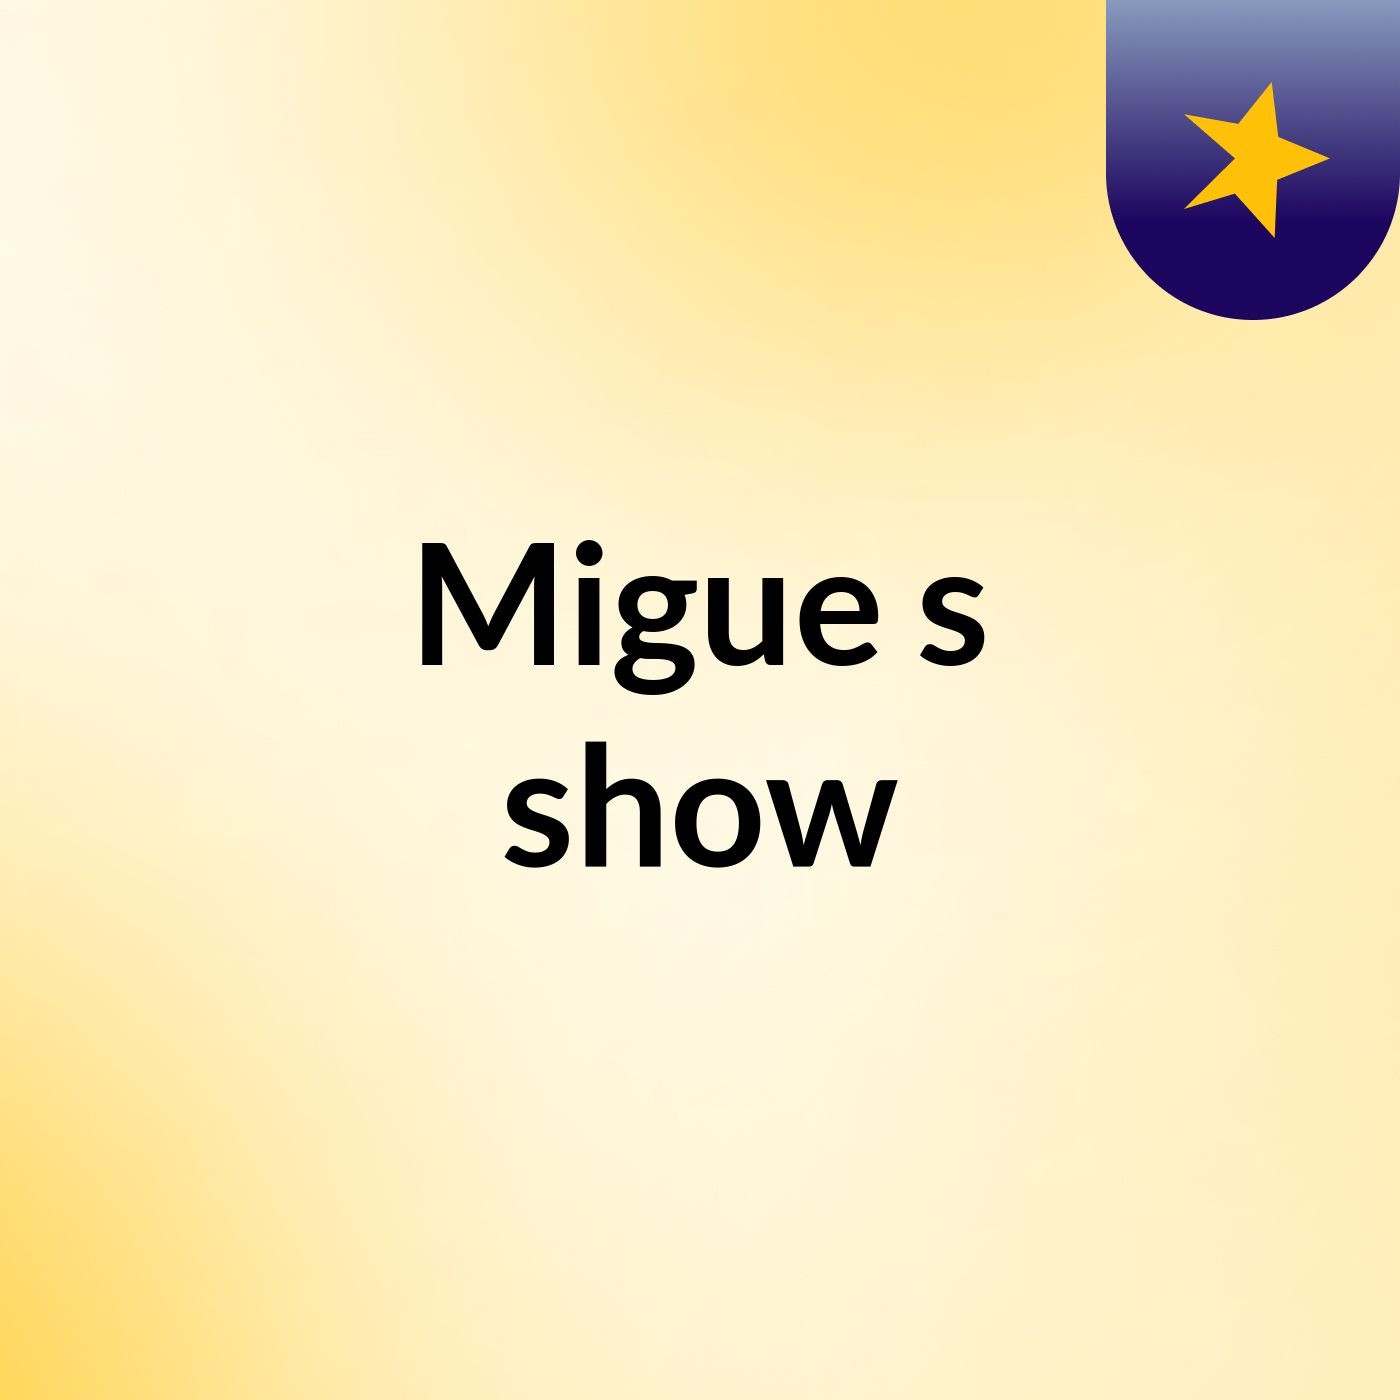 Migue's show